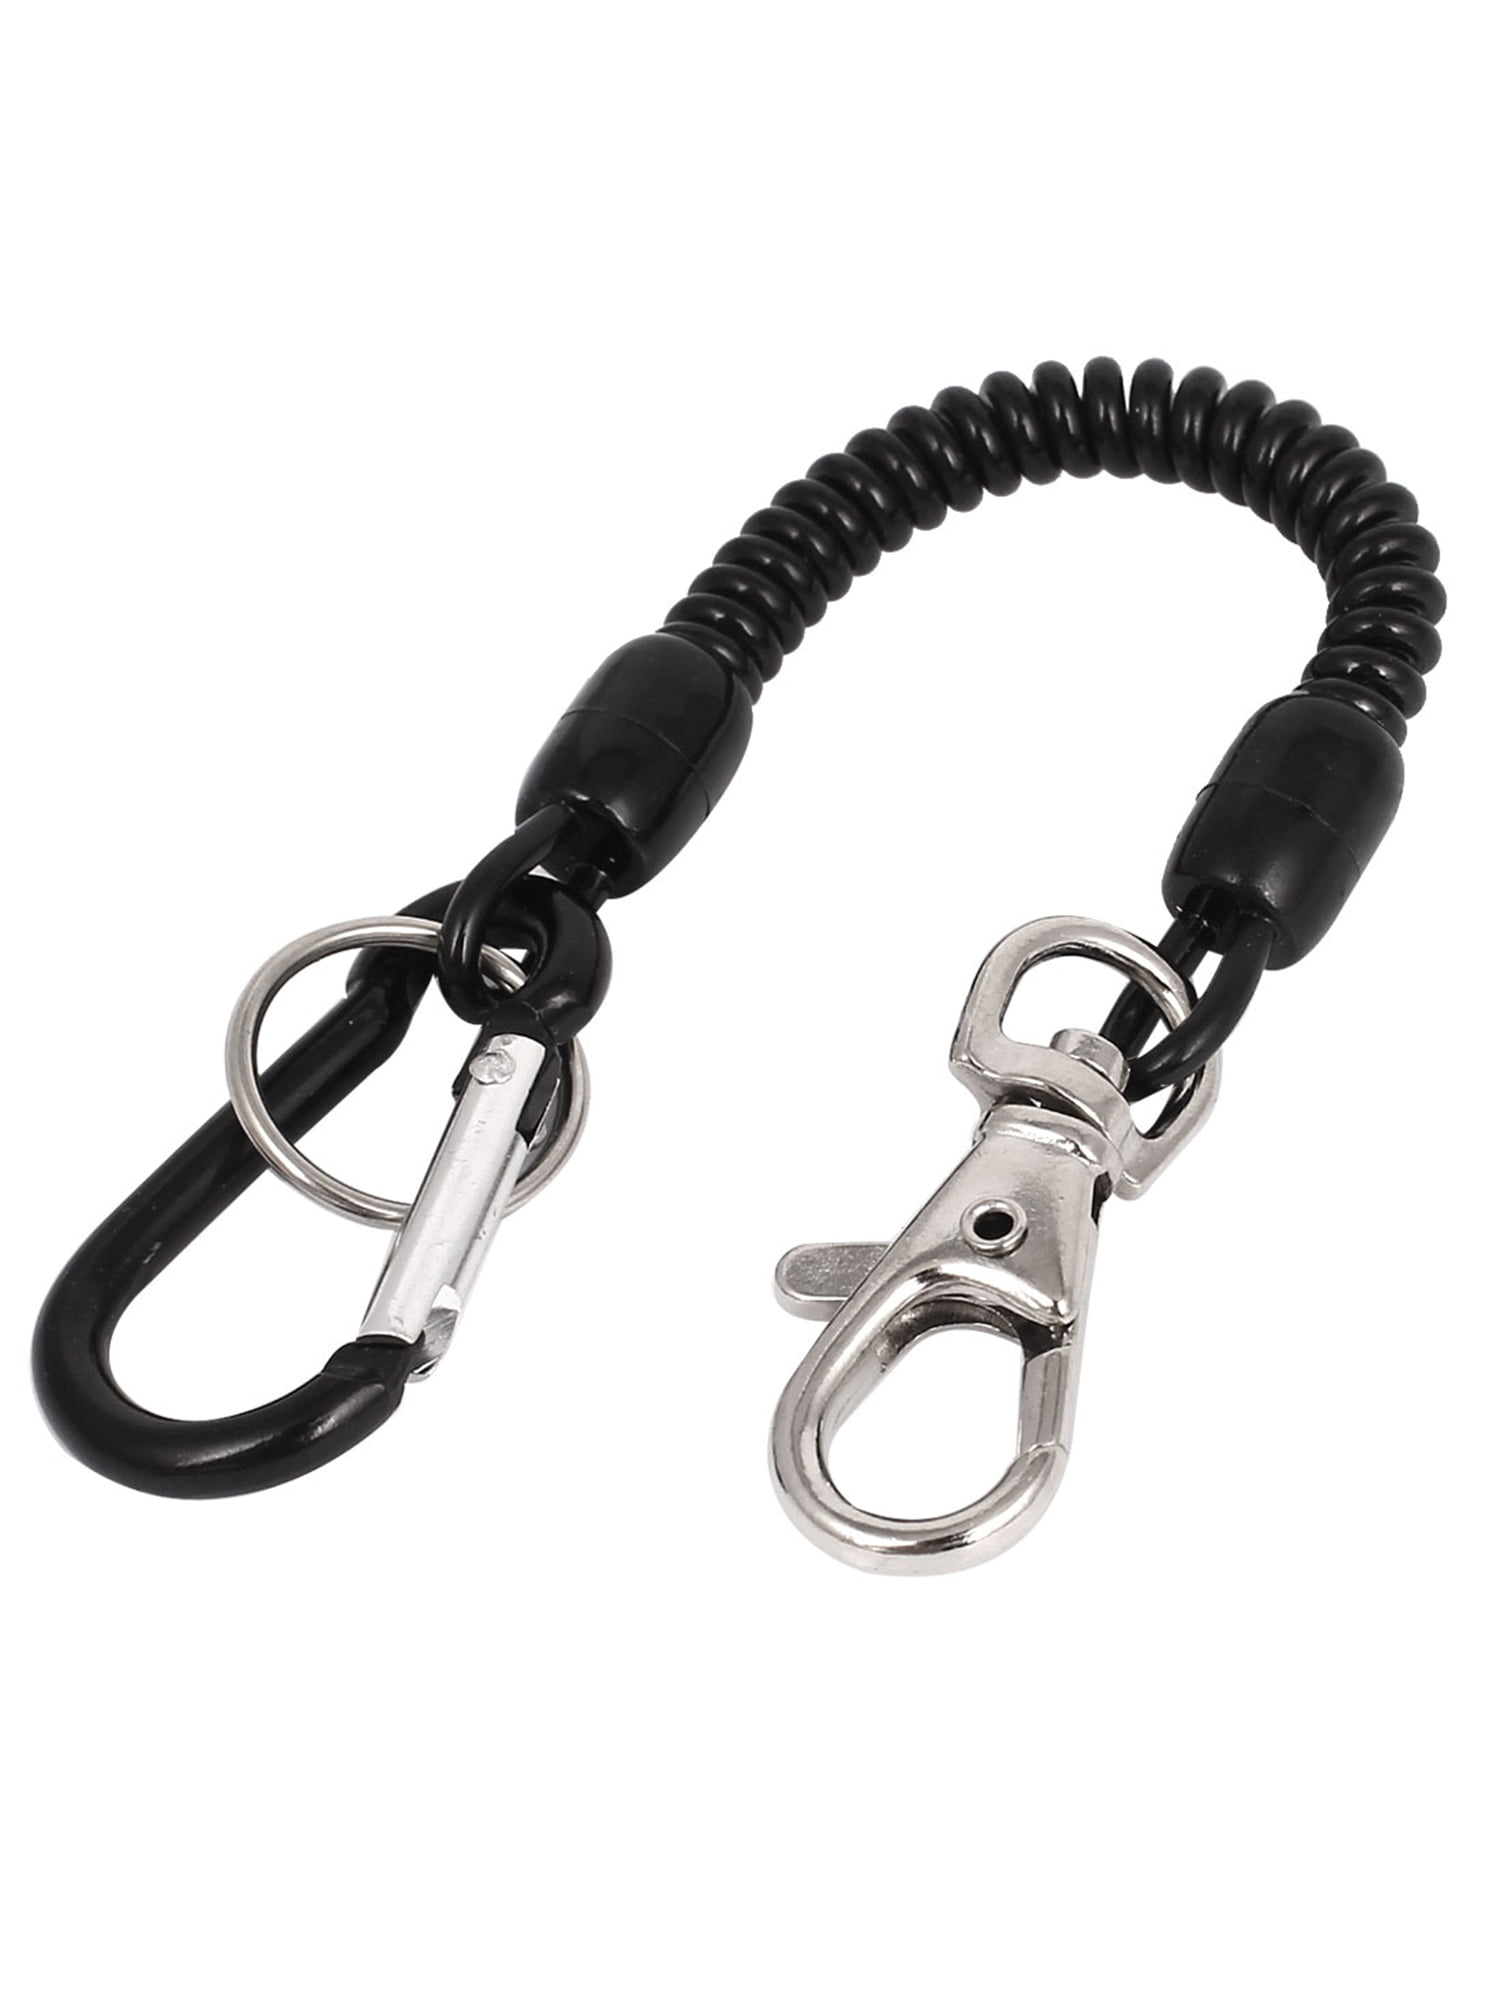 Keychain key ring hook outdoor stainless steel buckle 'carabiner climbing ran b$